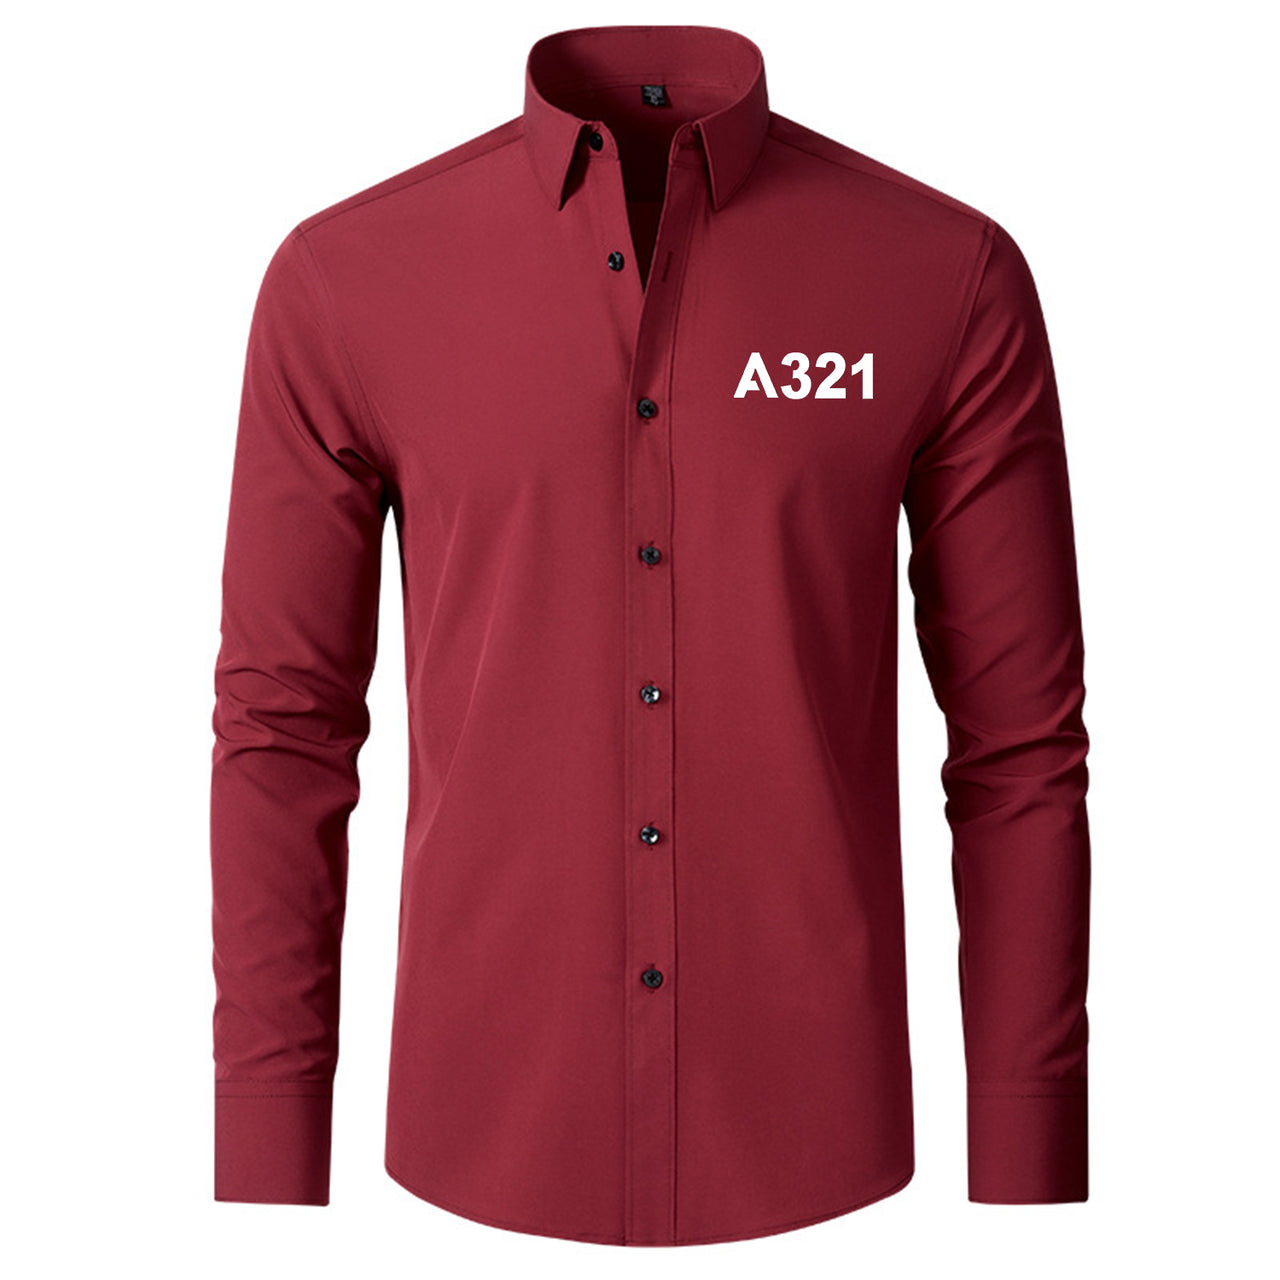 A321 Flat Text Designed Long Sleeve Shirts